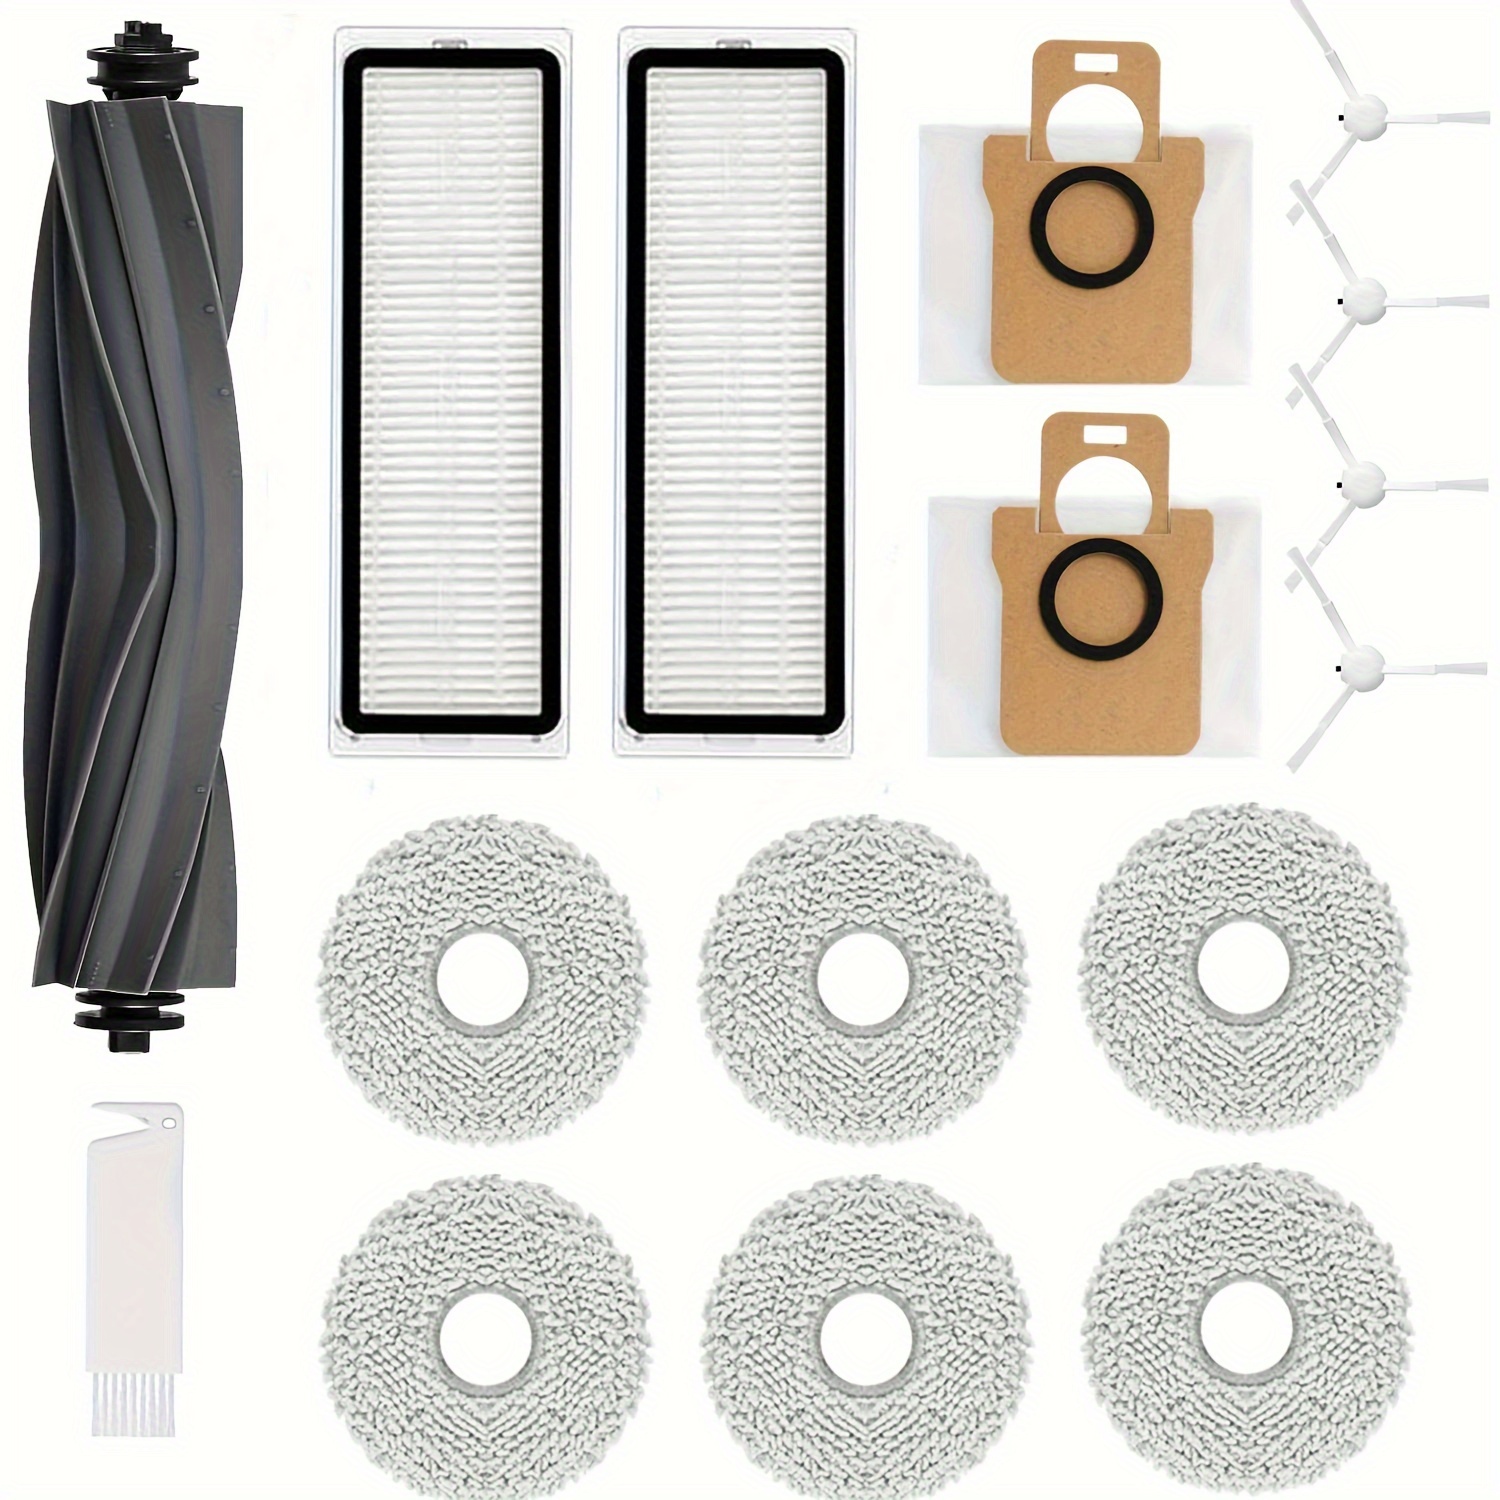  Replacement Parts Kit For Dreametech D10 Plus Robot Vacuum  Cleaner RLS3D Accessories, 2 Main Roller Brush, 4 Side Brush, 4 Hepa  Filter, 4 Mop Pad, 2 Dust Bags (15 Pcs) : Home & Kitchen